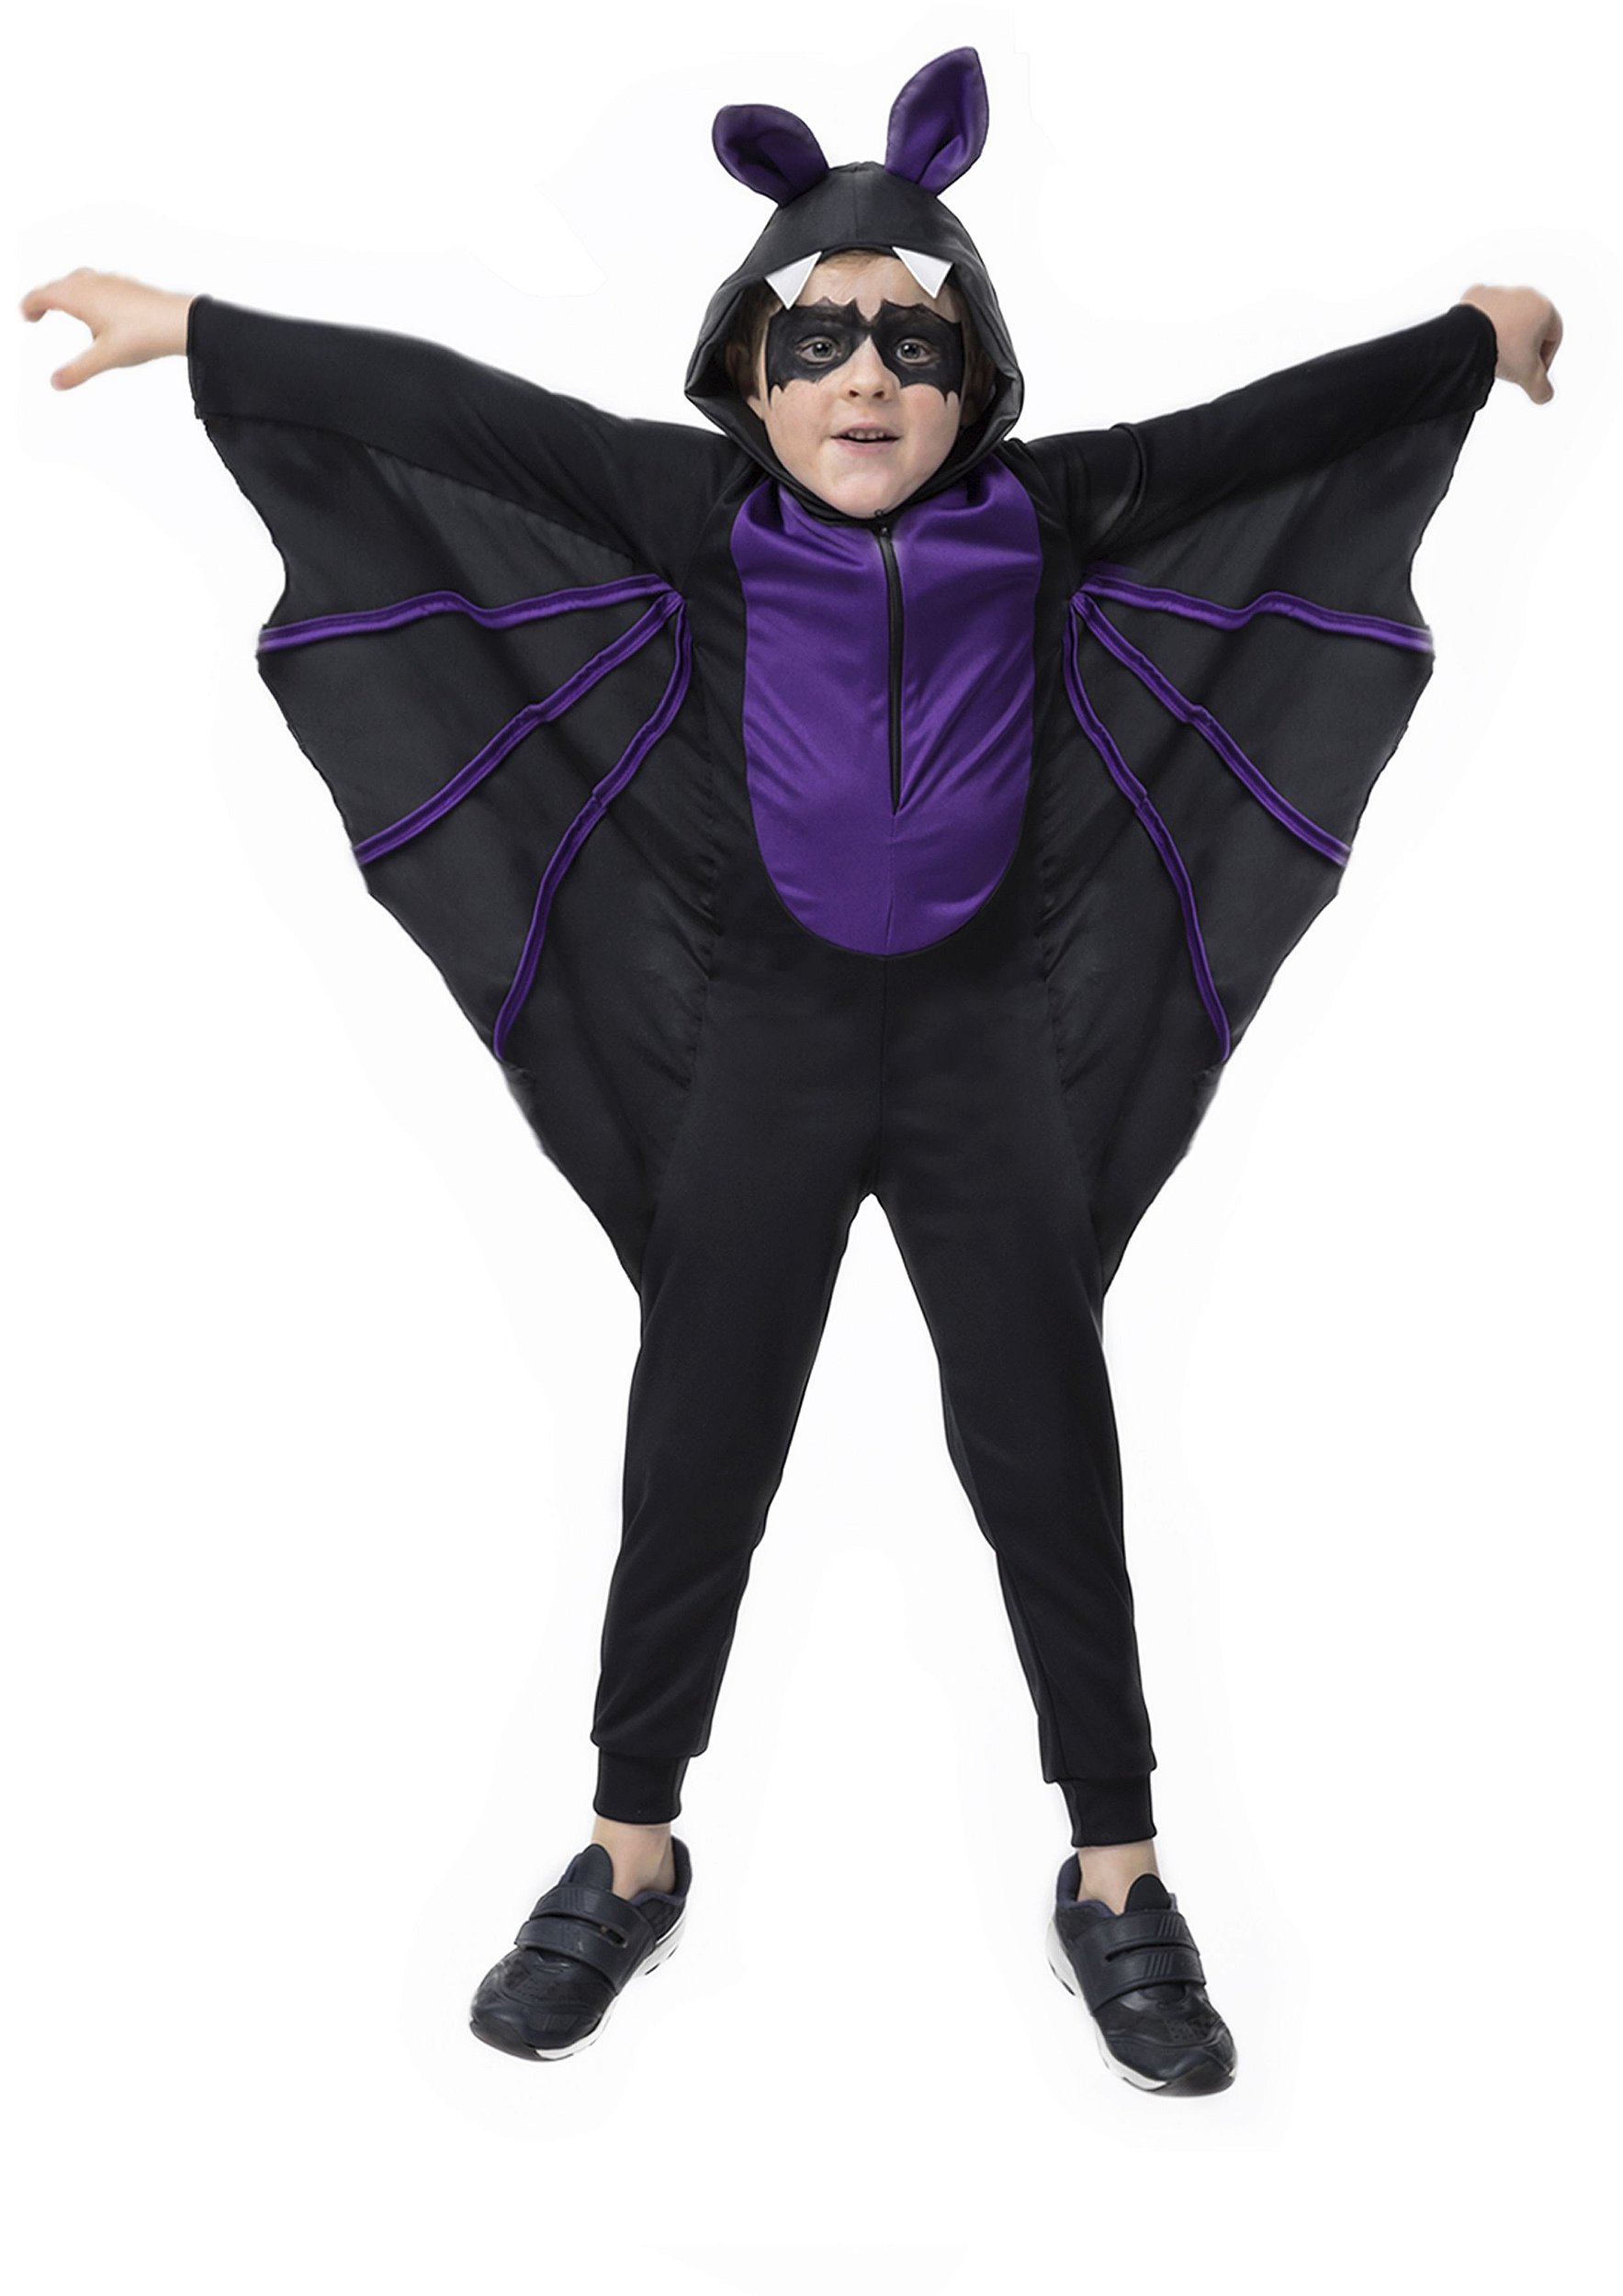 Fantasia de Halloween Menino Morcego com Capa